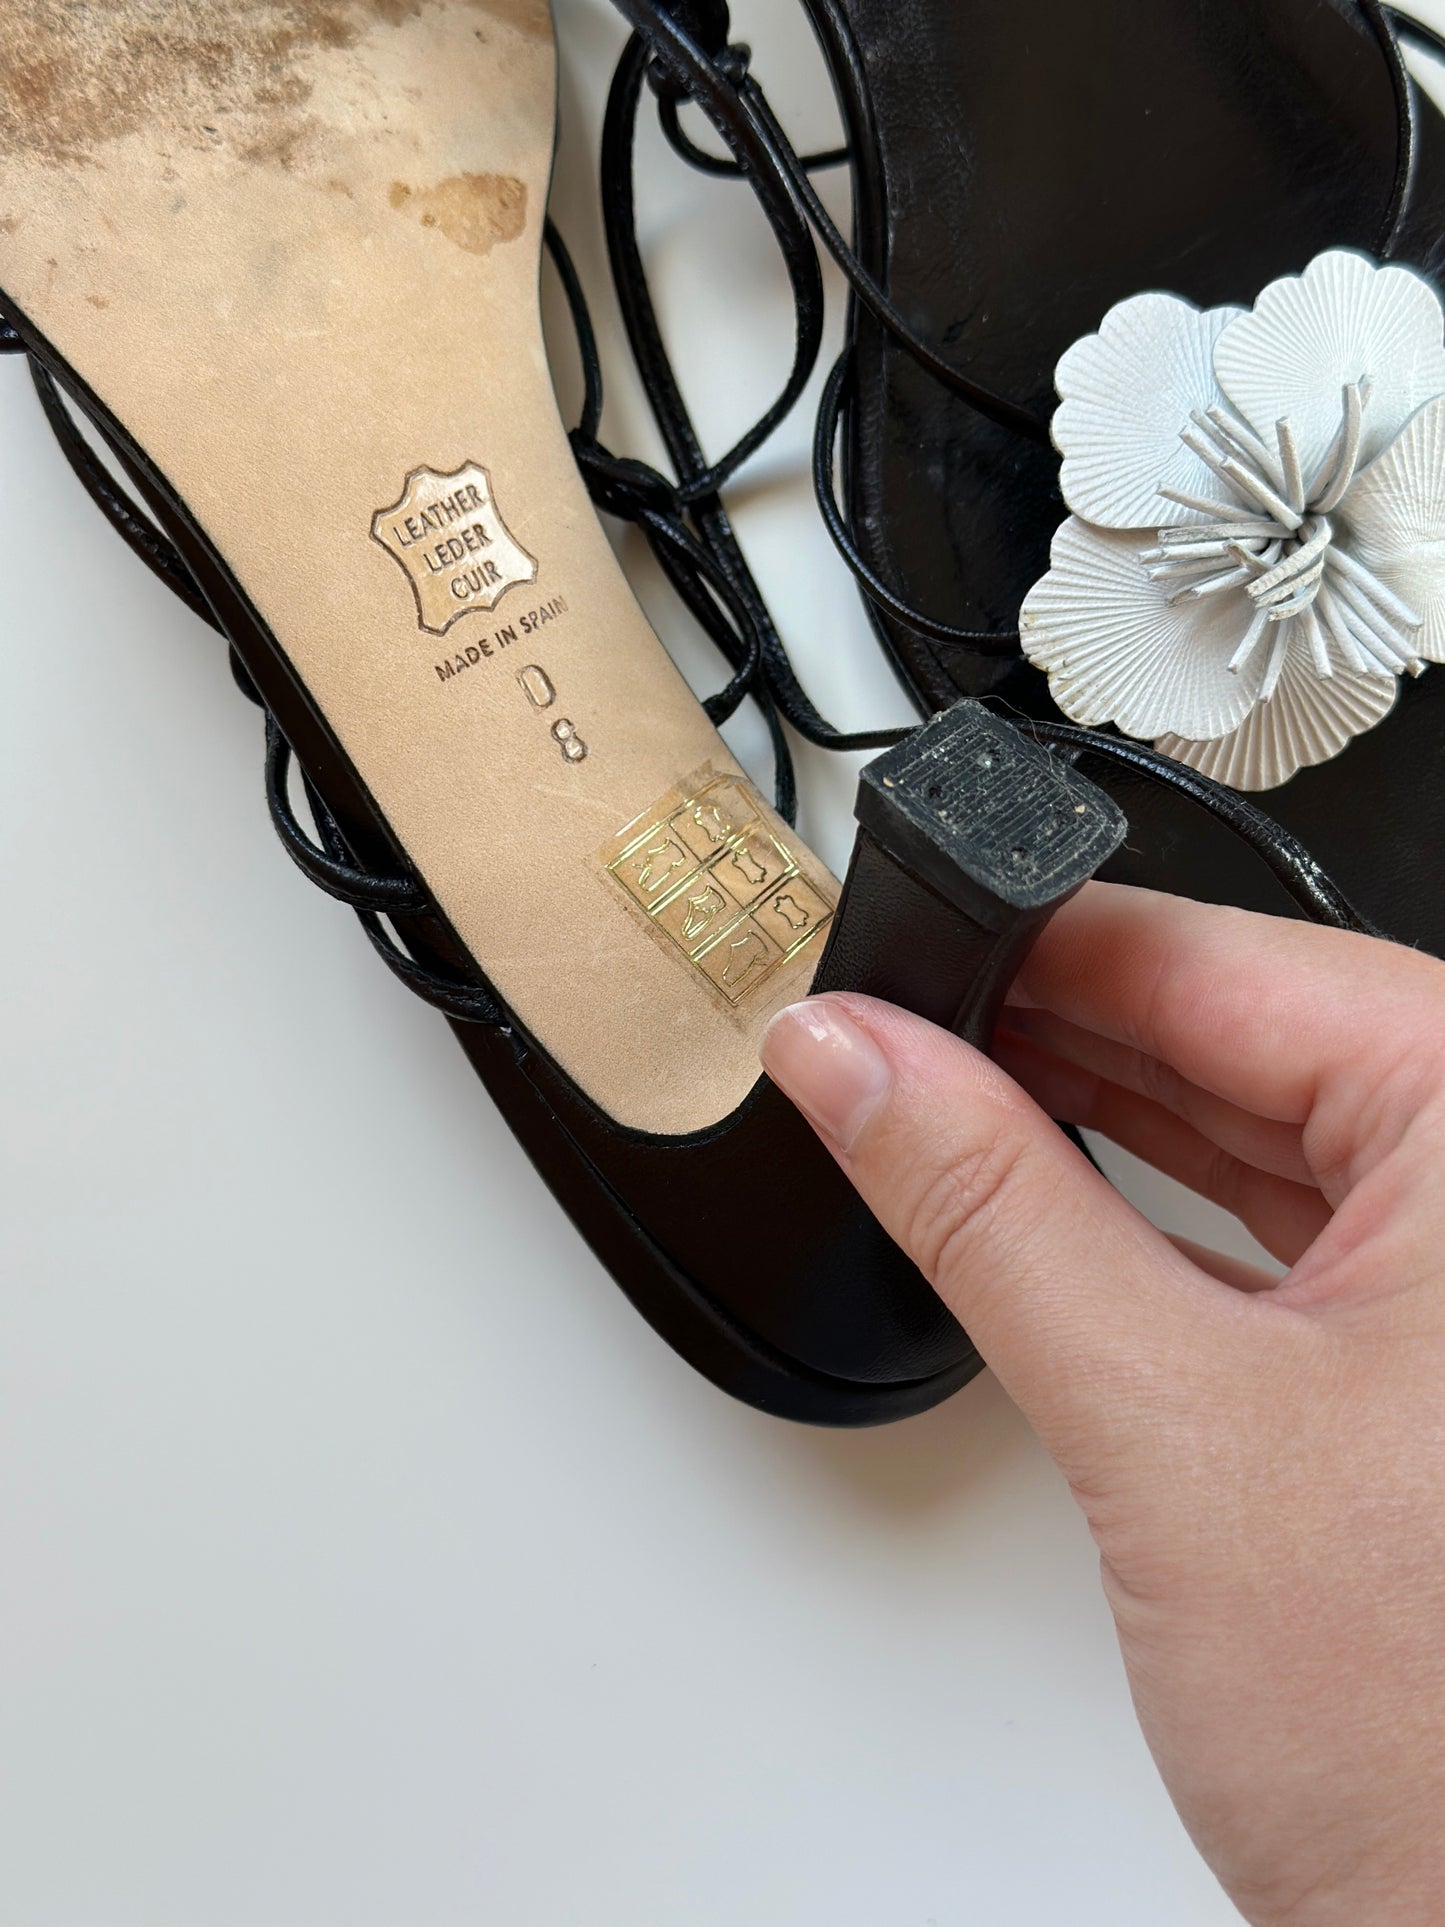 Vintage leather heeled sandals